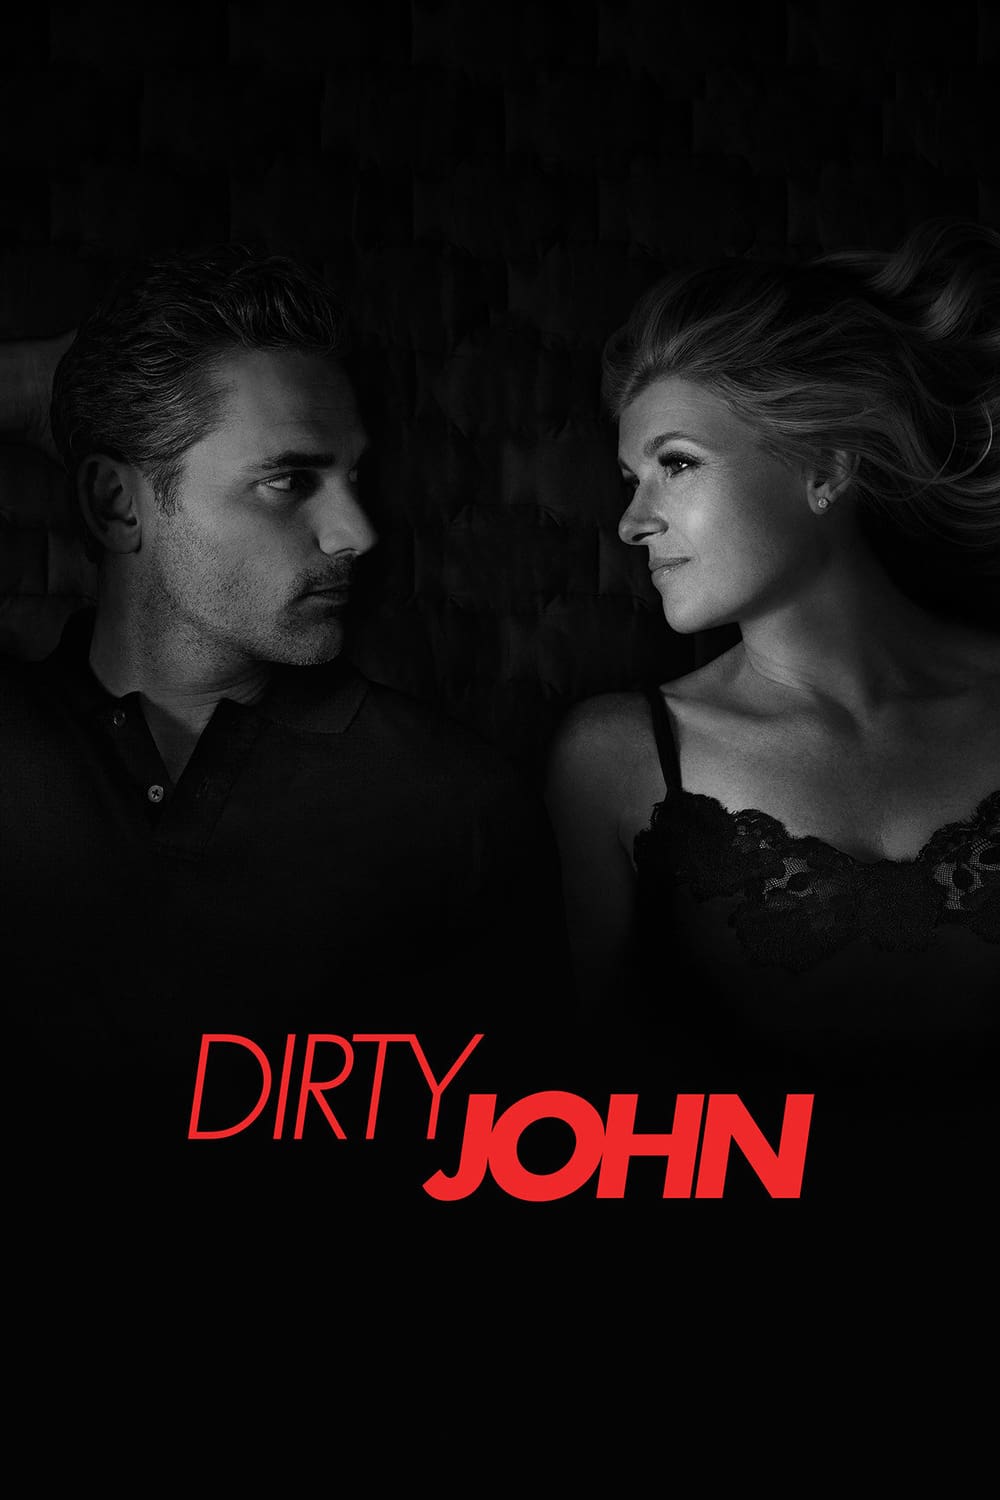 Dirty John rating